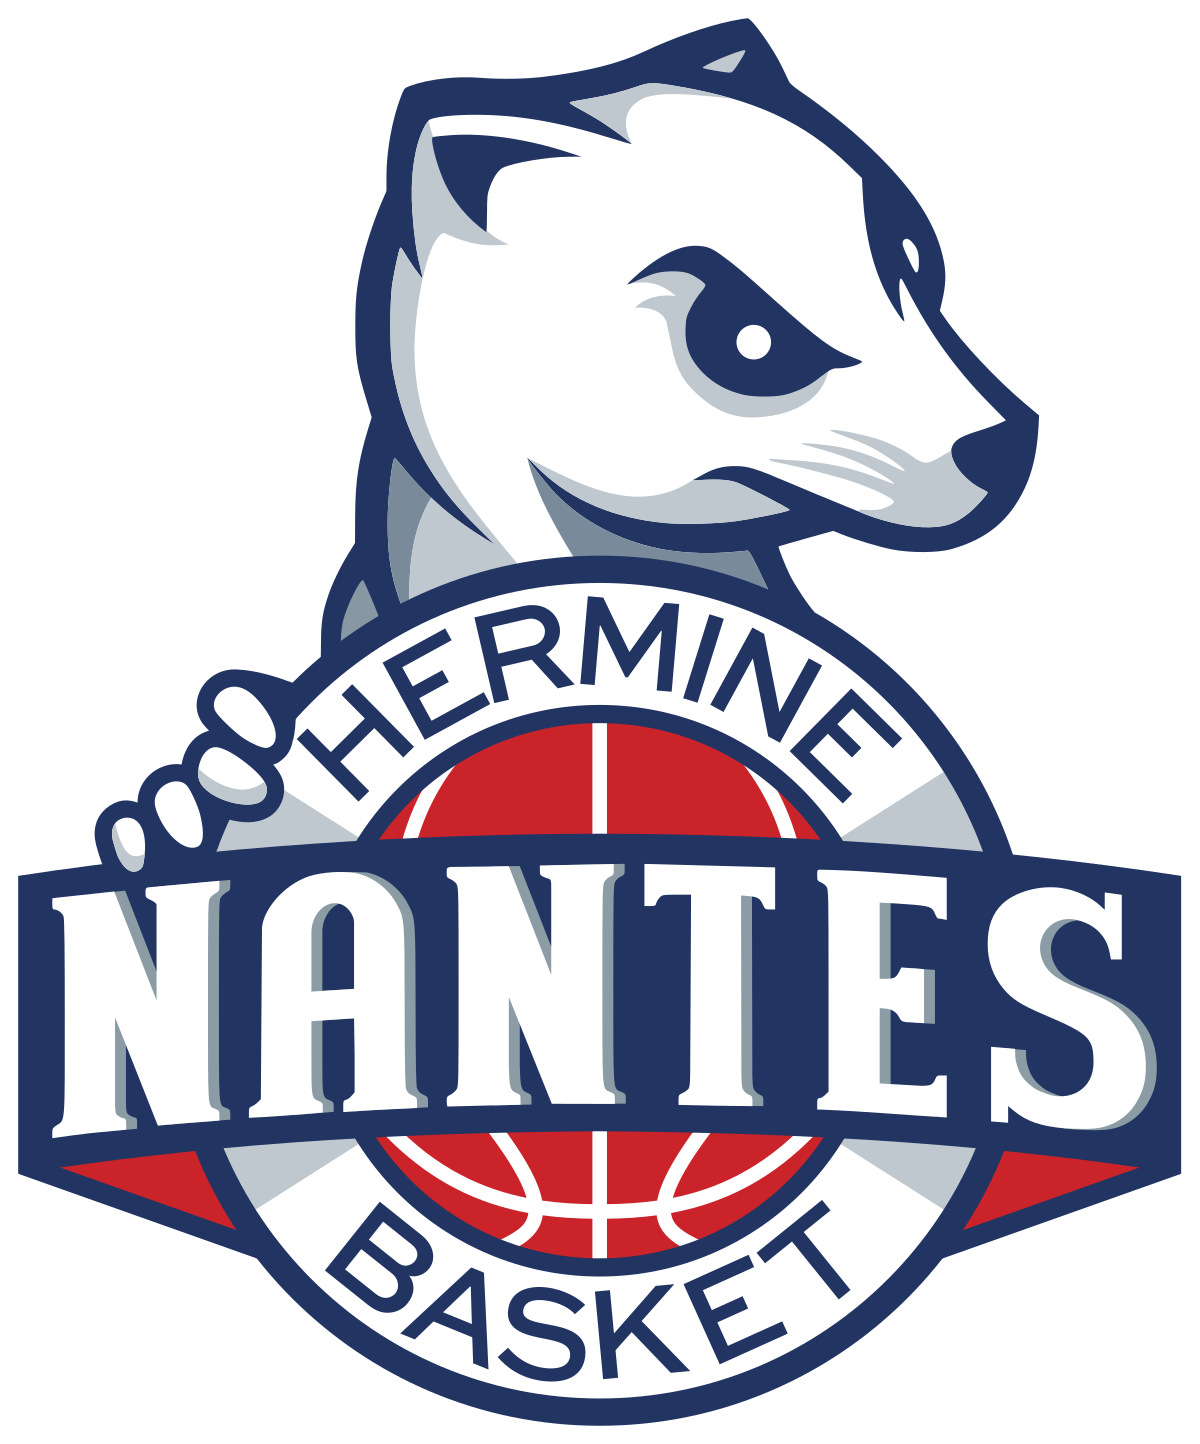 Logo_Nantes_Basket_Hermine_-_2017.svg